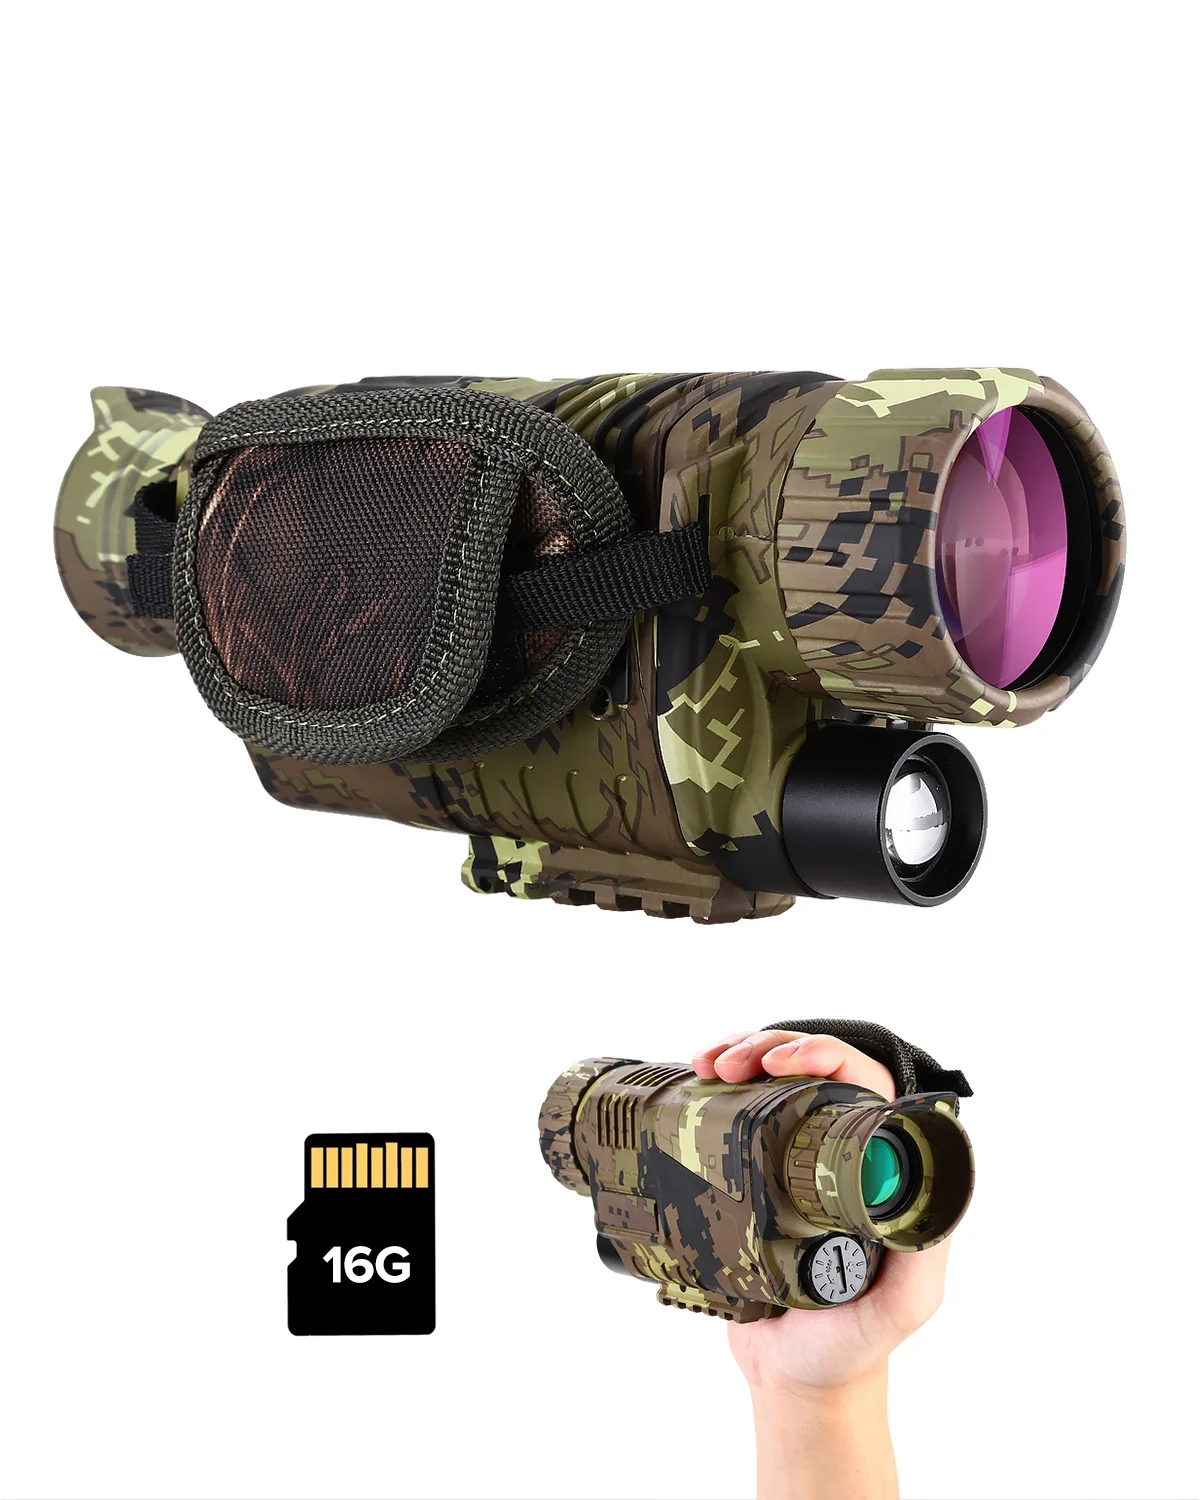 

Infrared Digital Night Vision Monocular Binoculars 16G IR Telescope 5x8 Optics Scope Photo Video Recording Hunting Camera Device